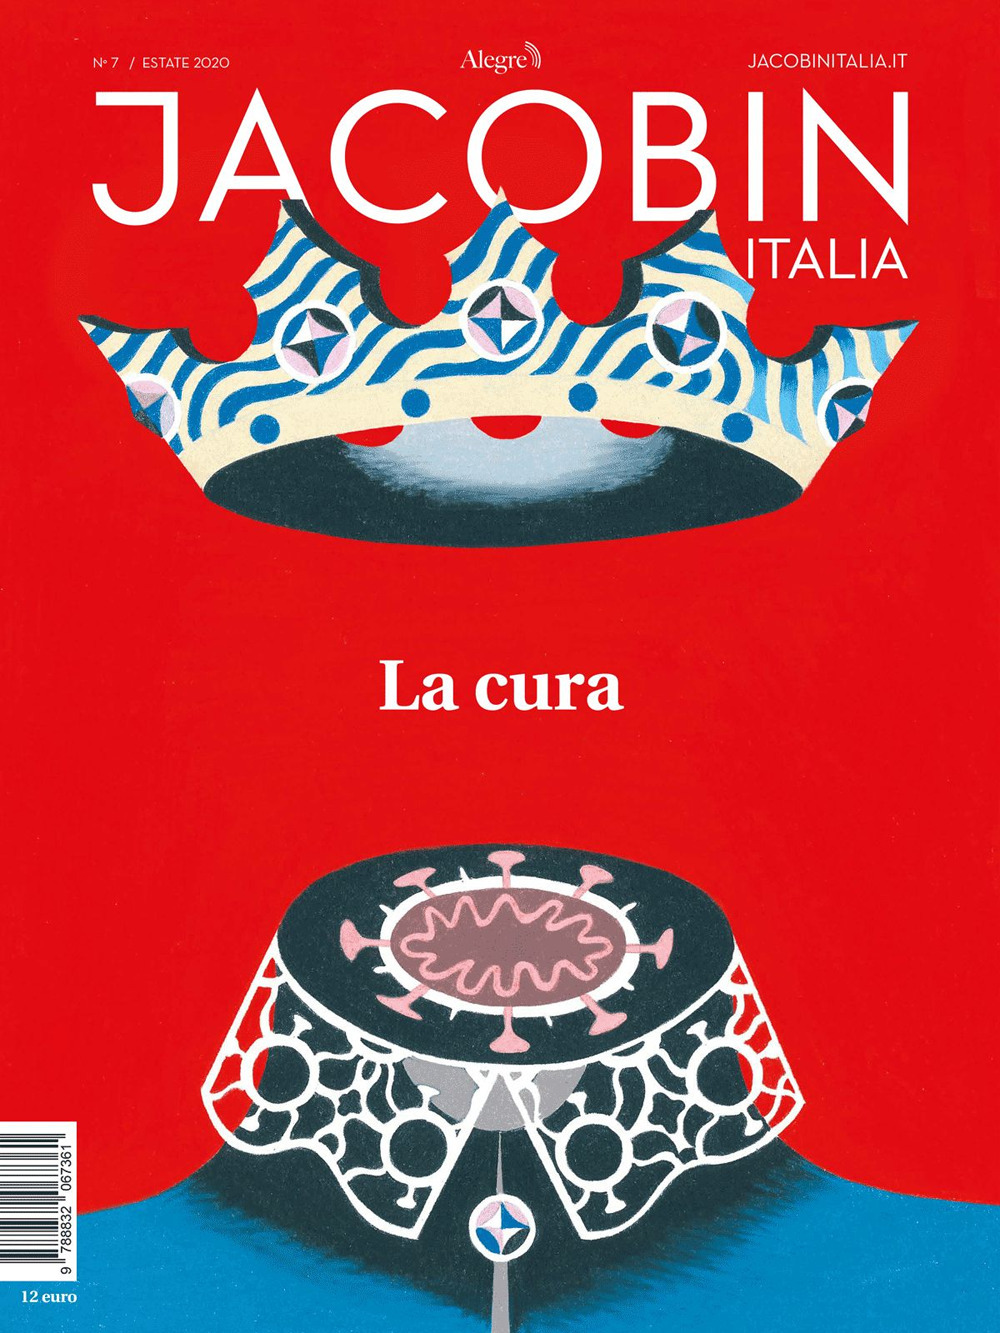 Image of Jacobin Italia (2020). Vol. 7: cura, La.